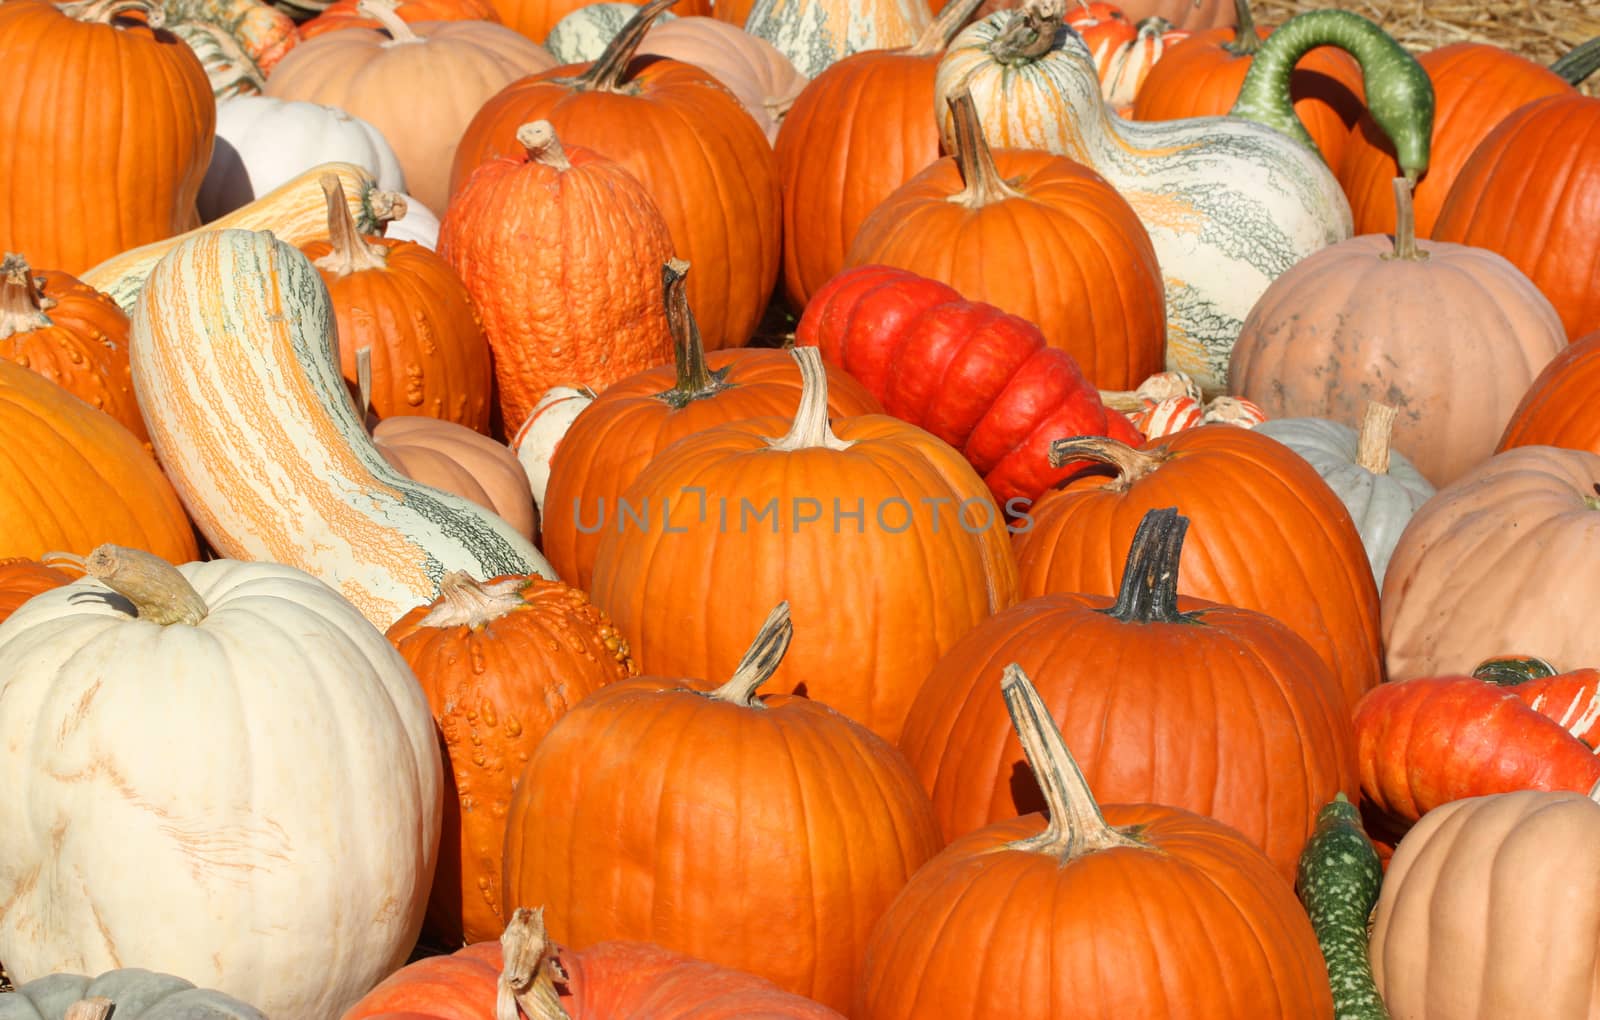 Ripe autumn pumpkins